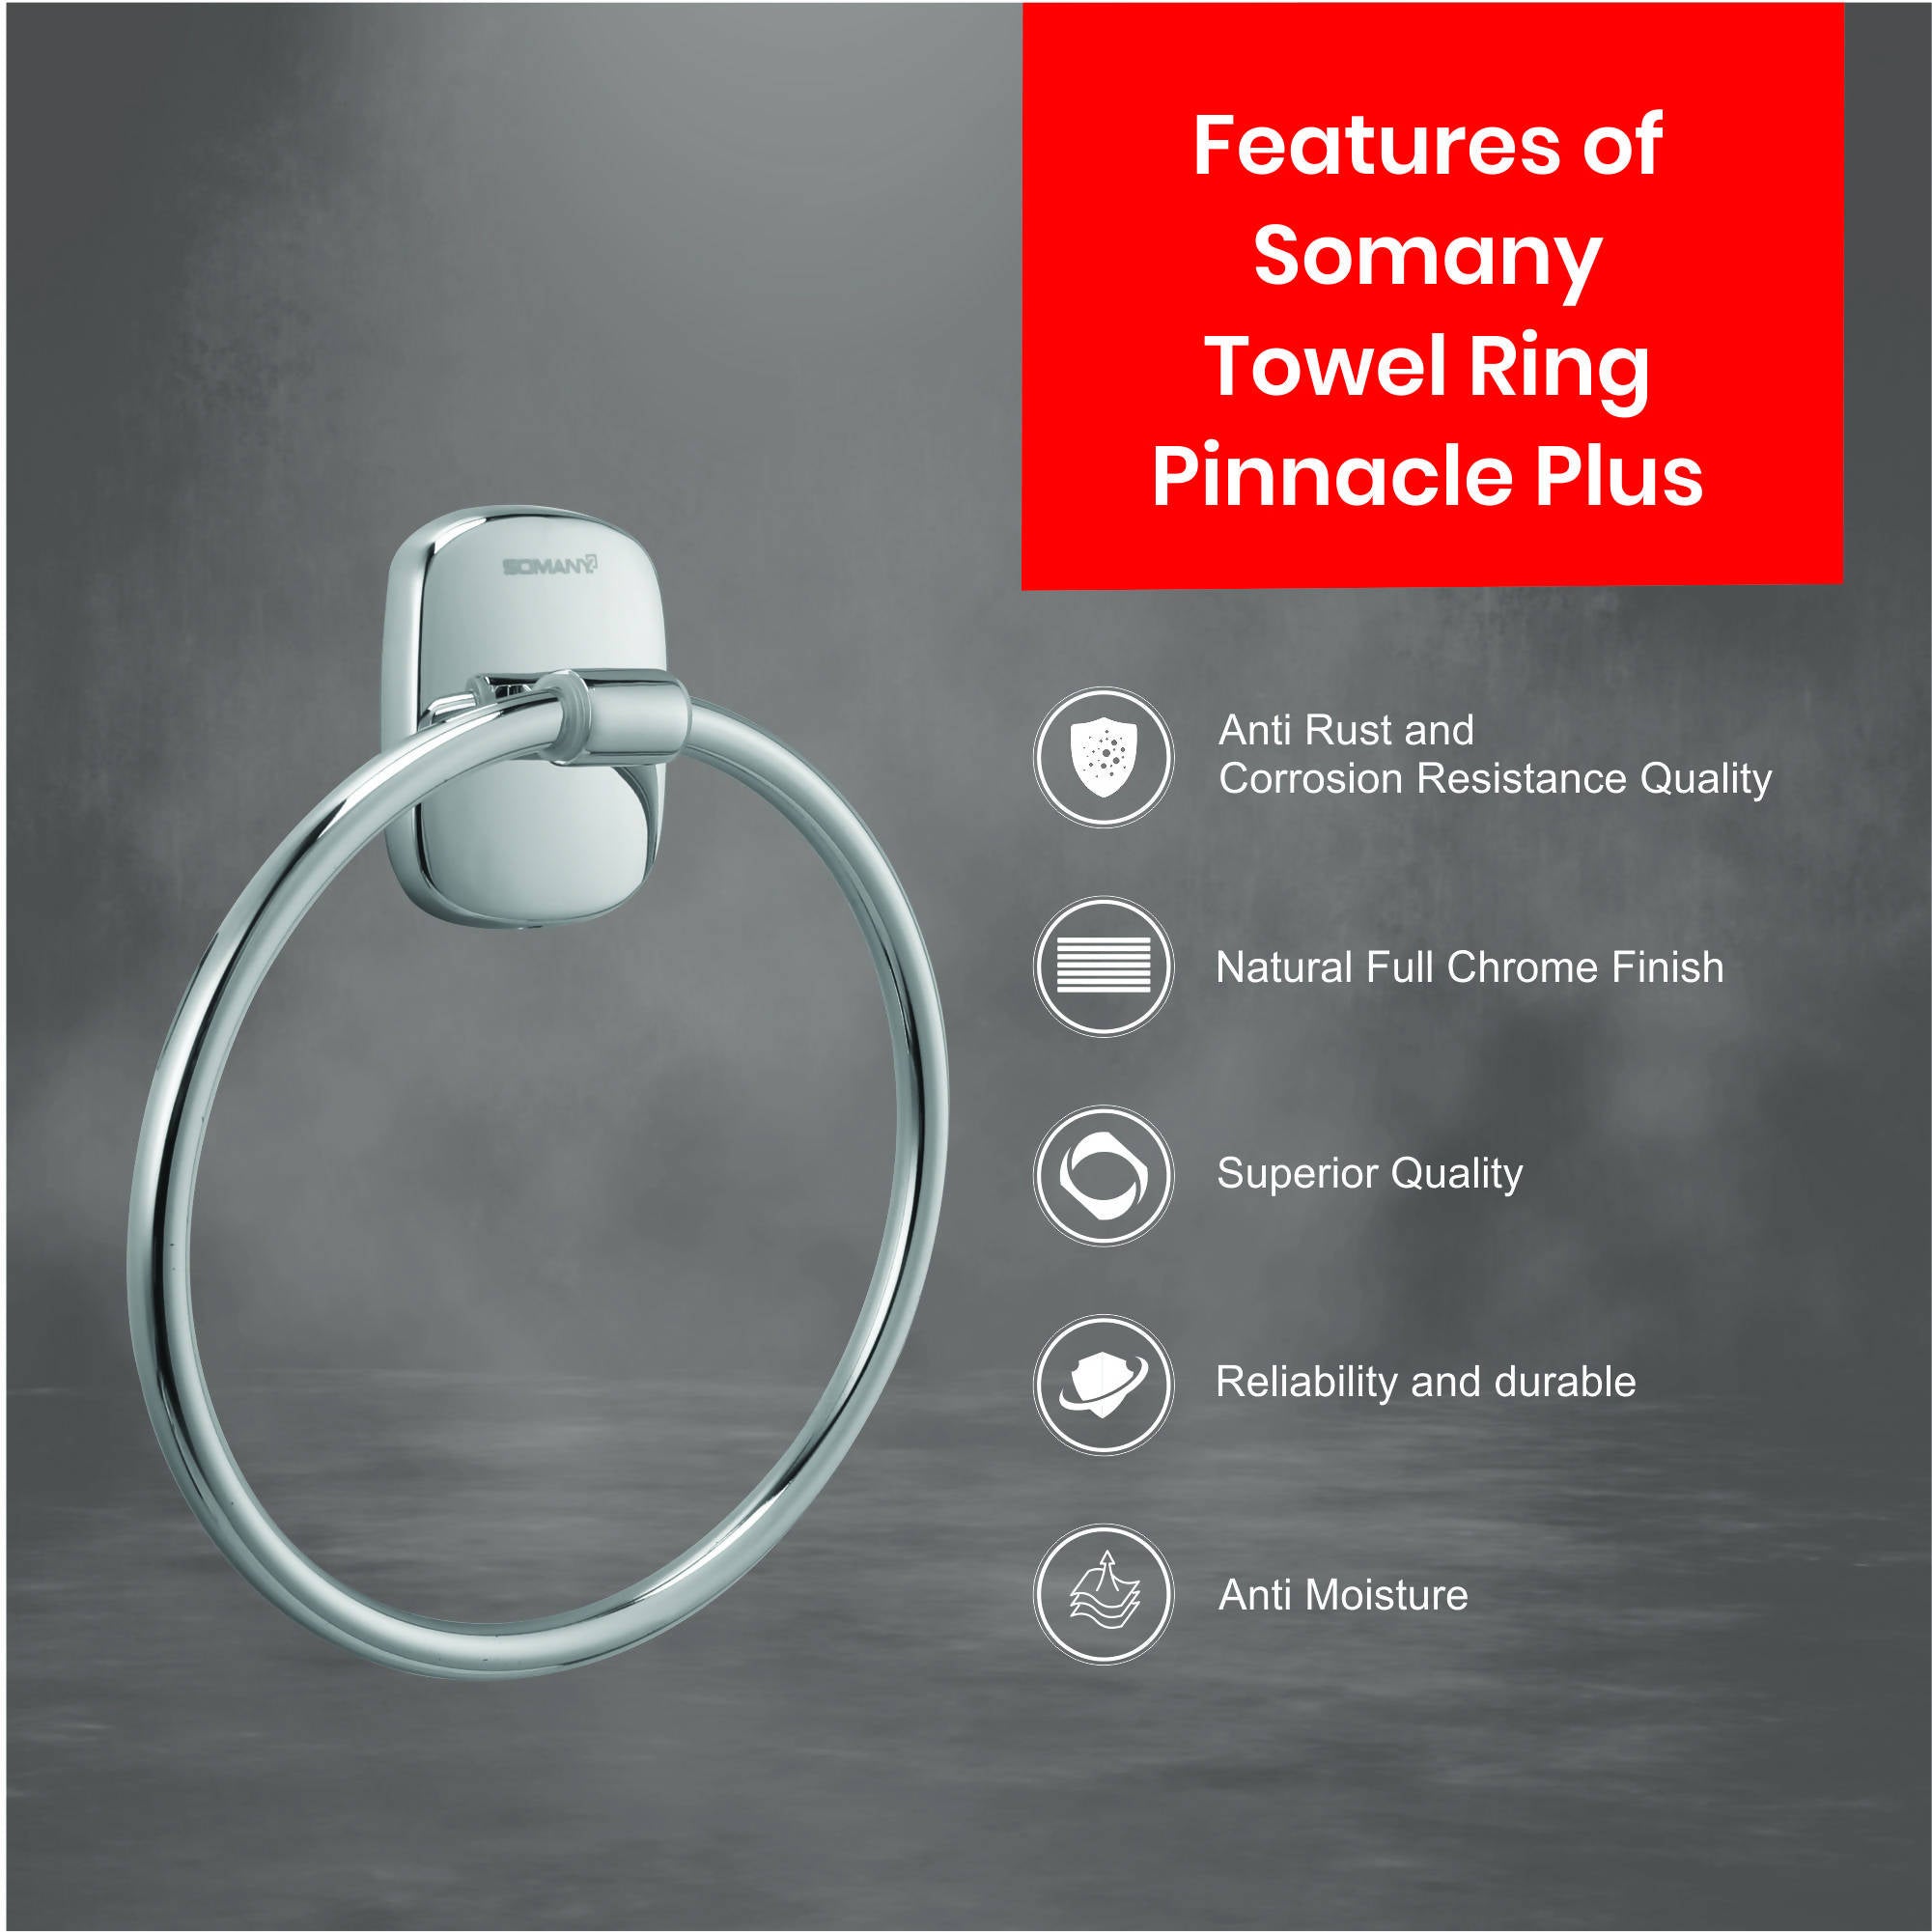 Somany Towel Ring Pinnacle